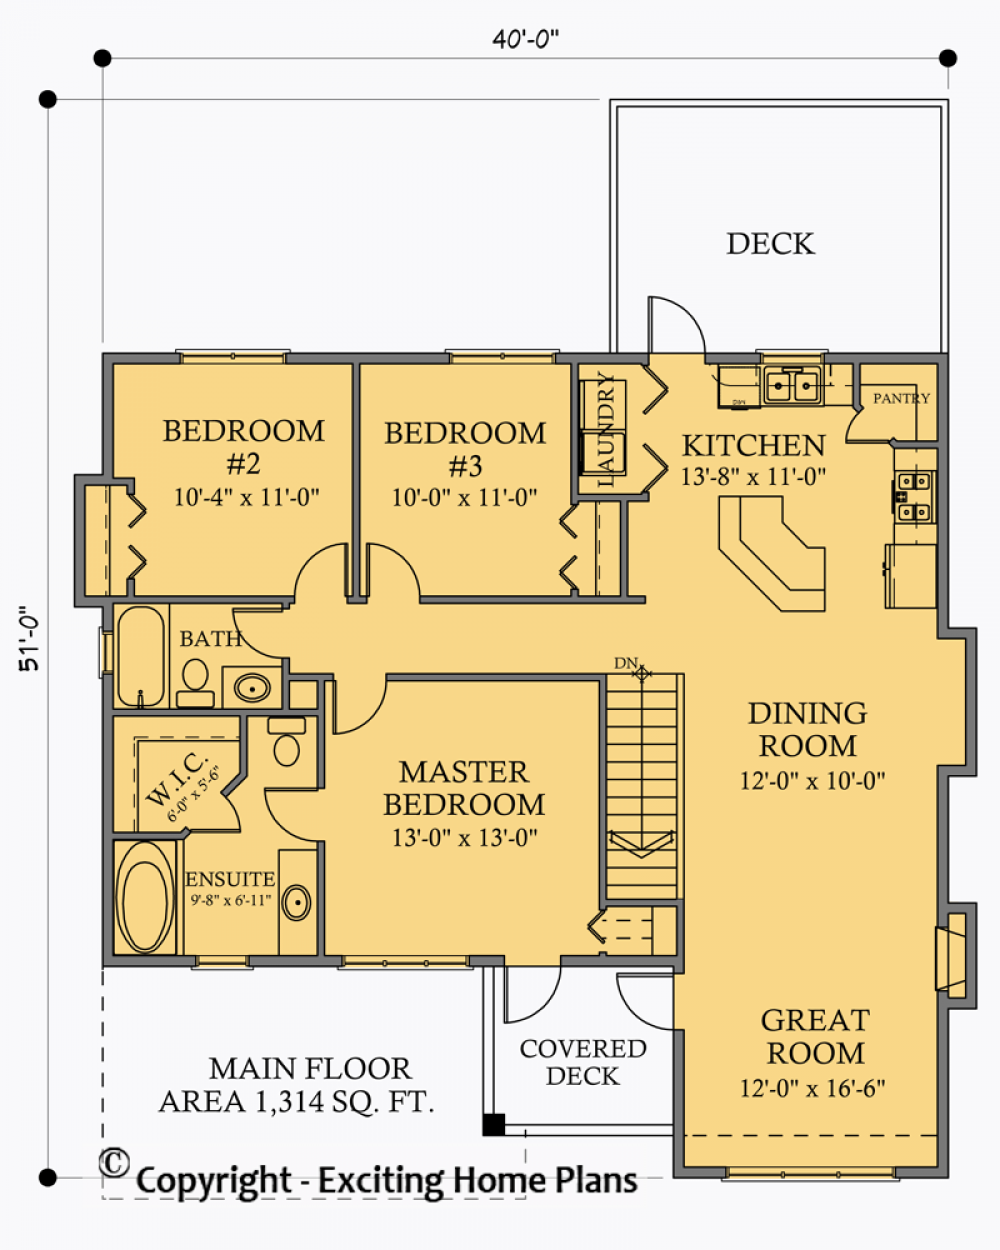 House Plan E1040-10 Main Floor Plan